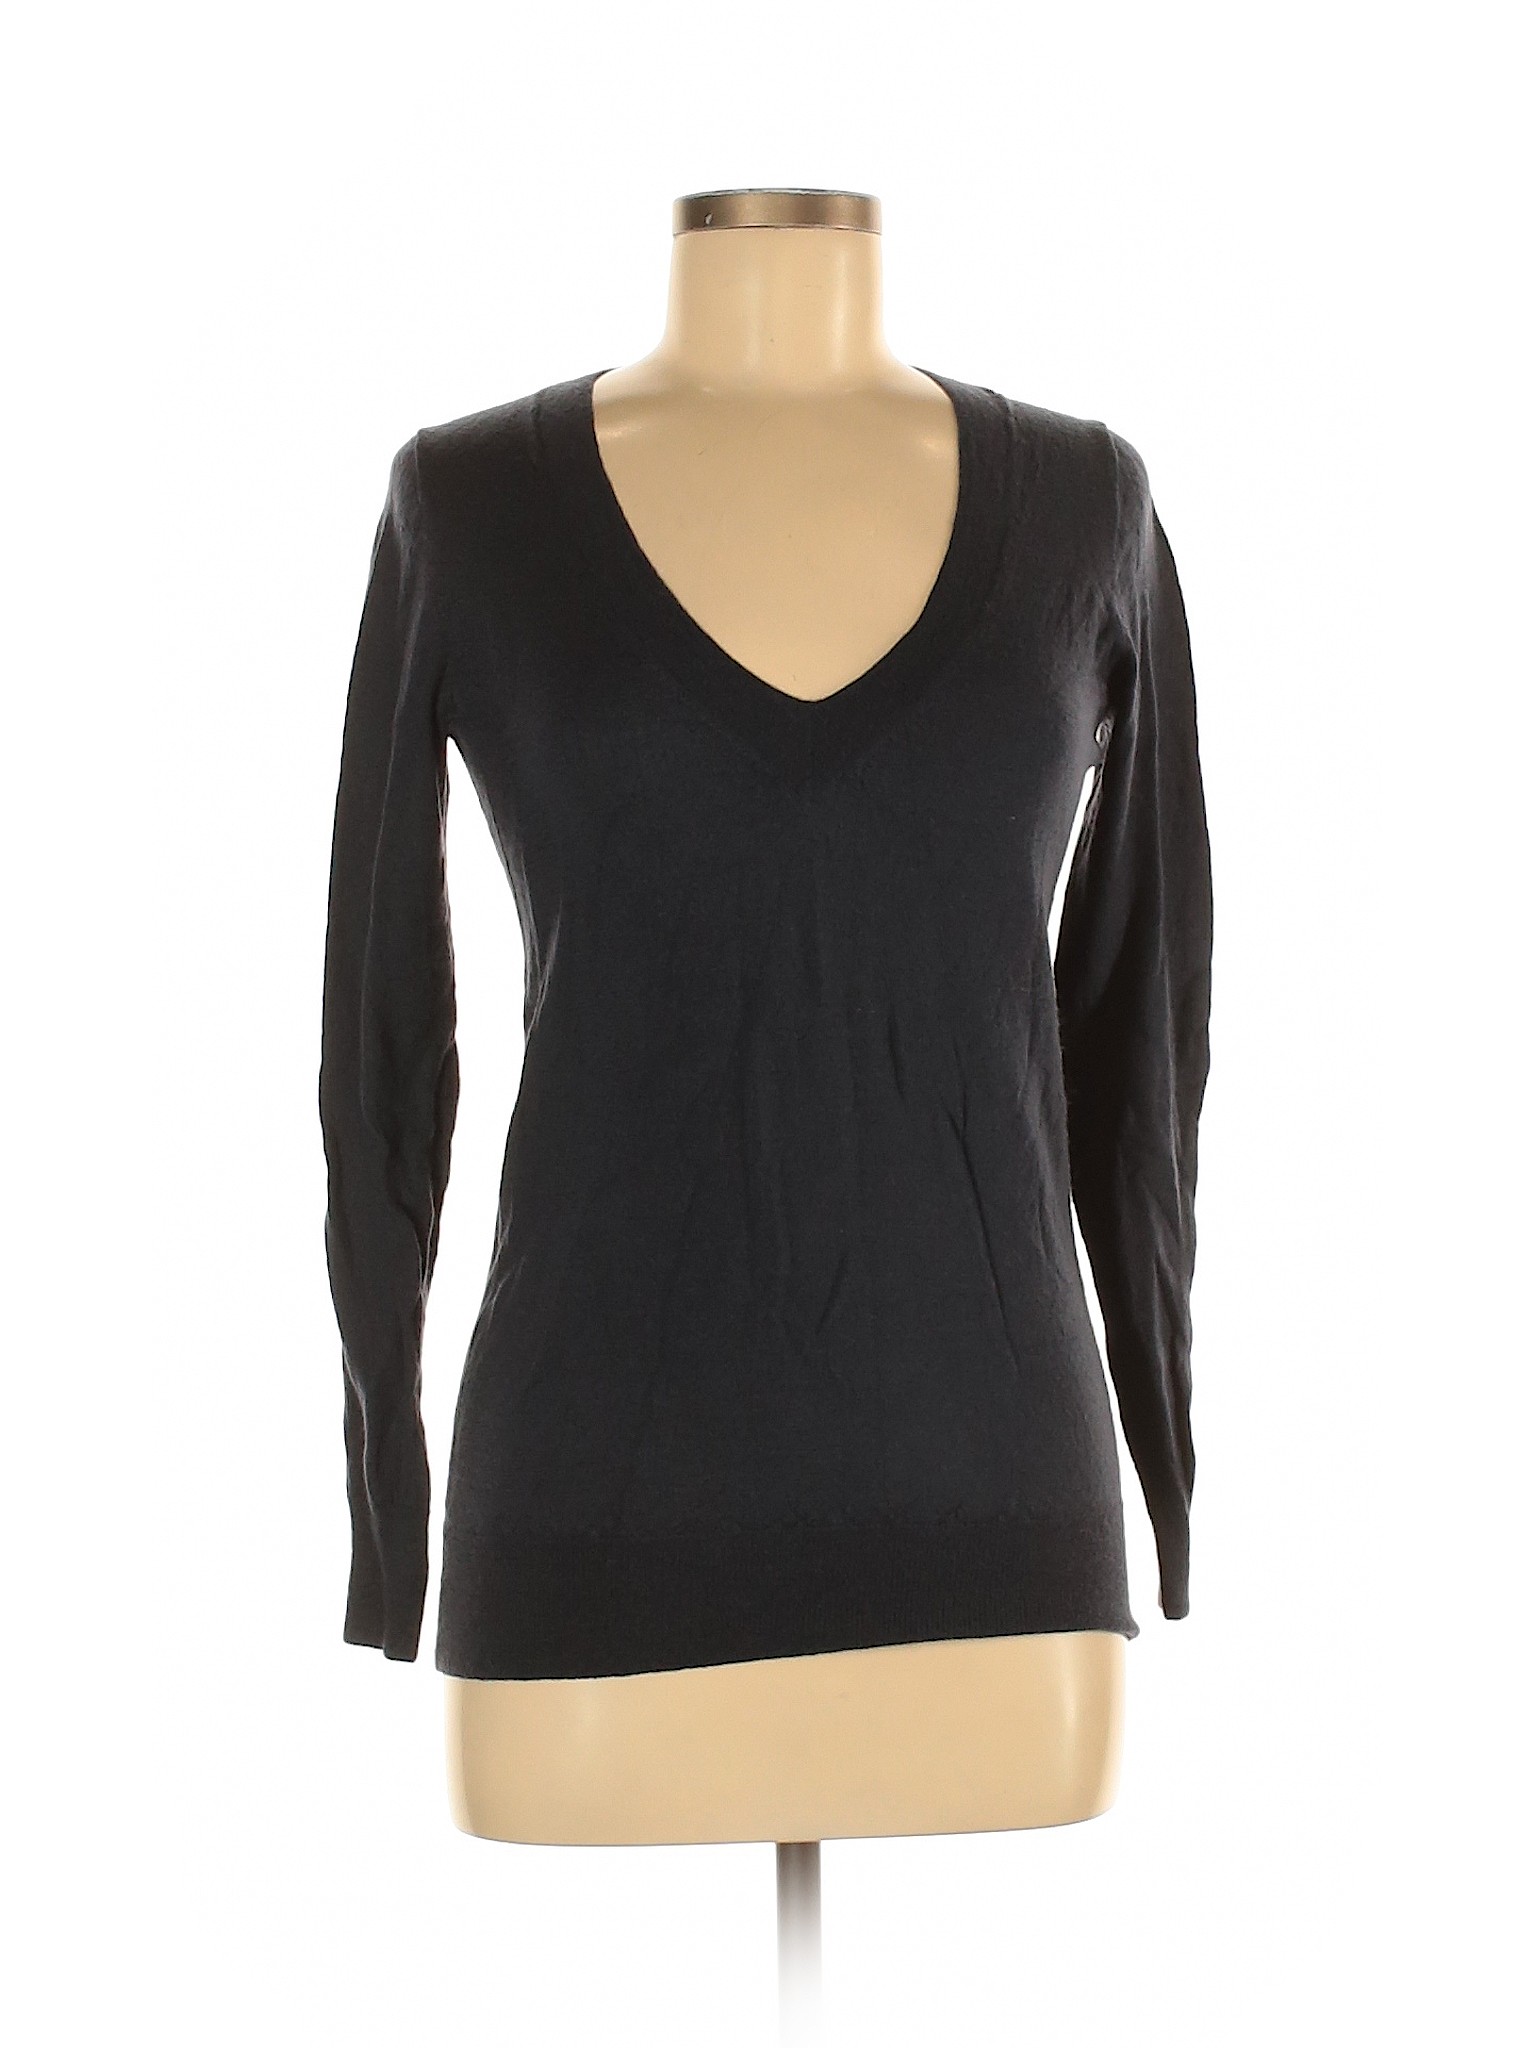 J.Crew Women Gray Wool Pullover Sweater M | eBay